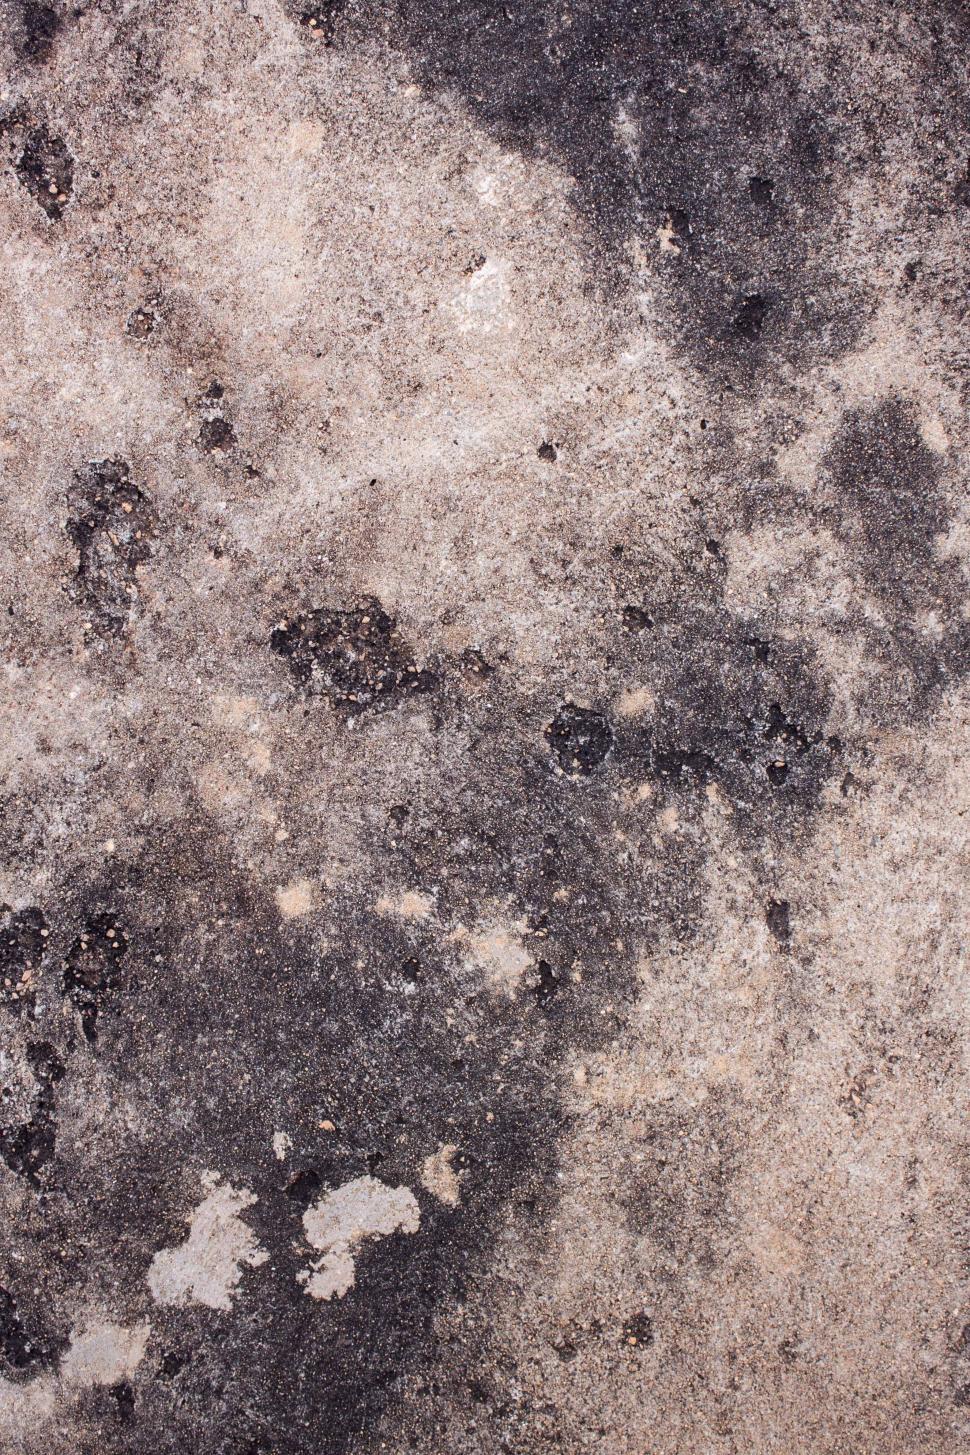 Free Image of Dark and Light Concrete texture floor 